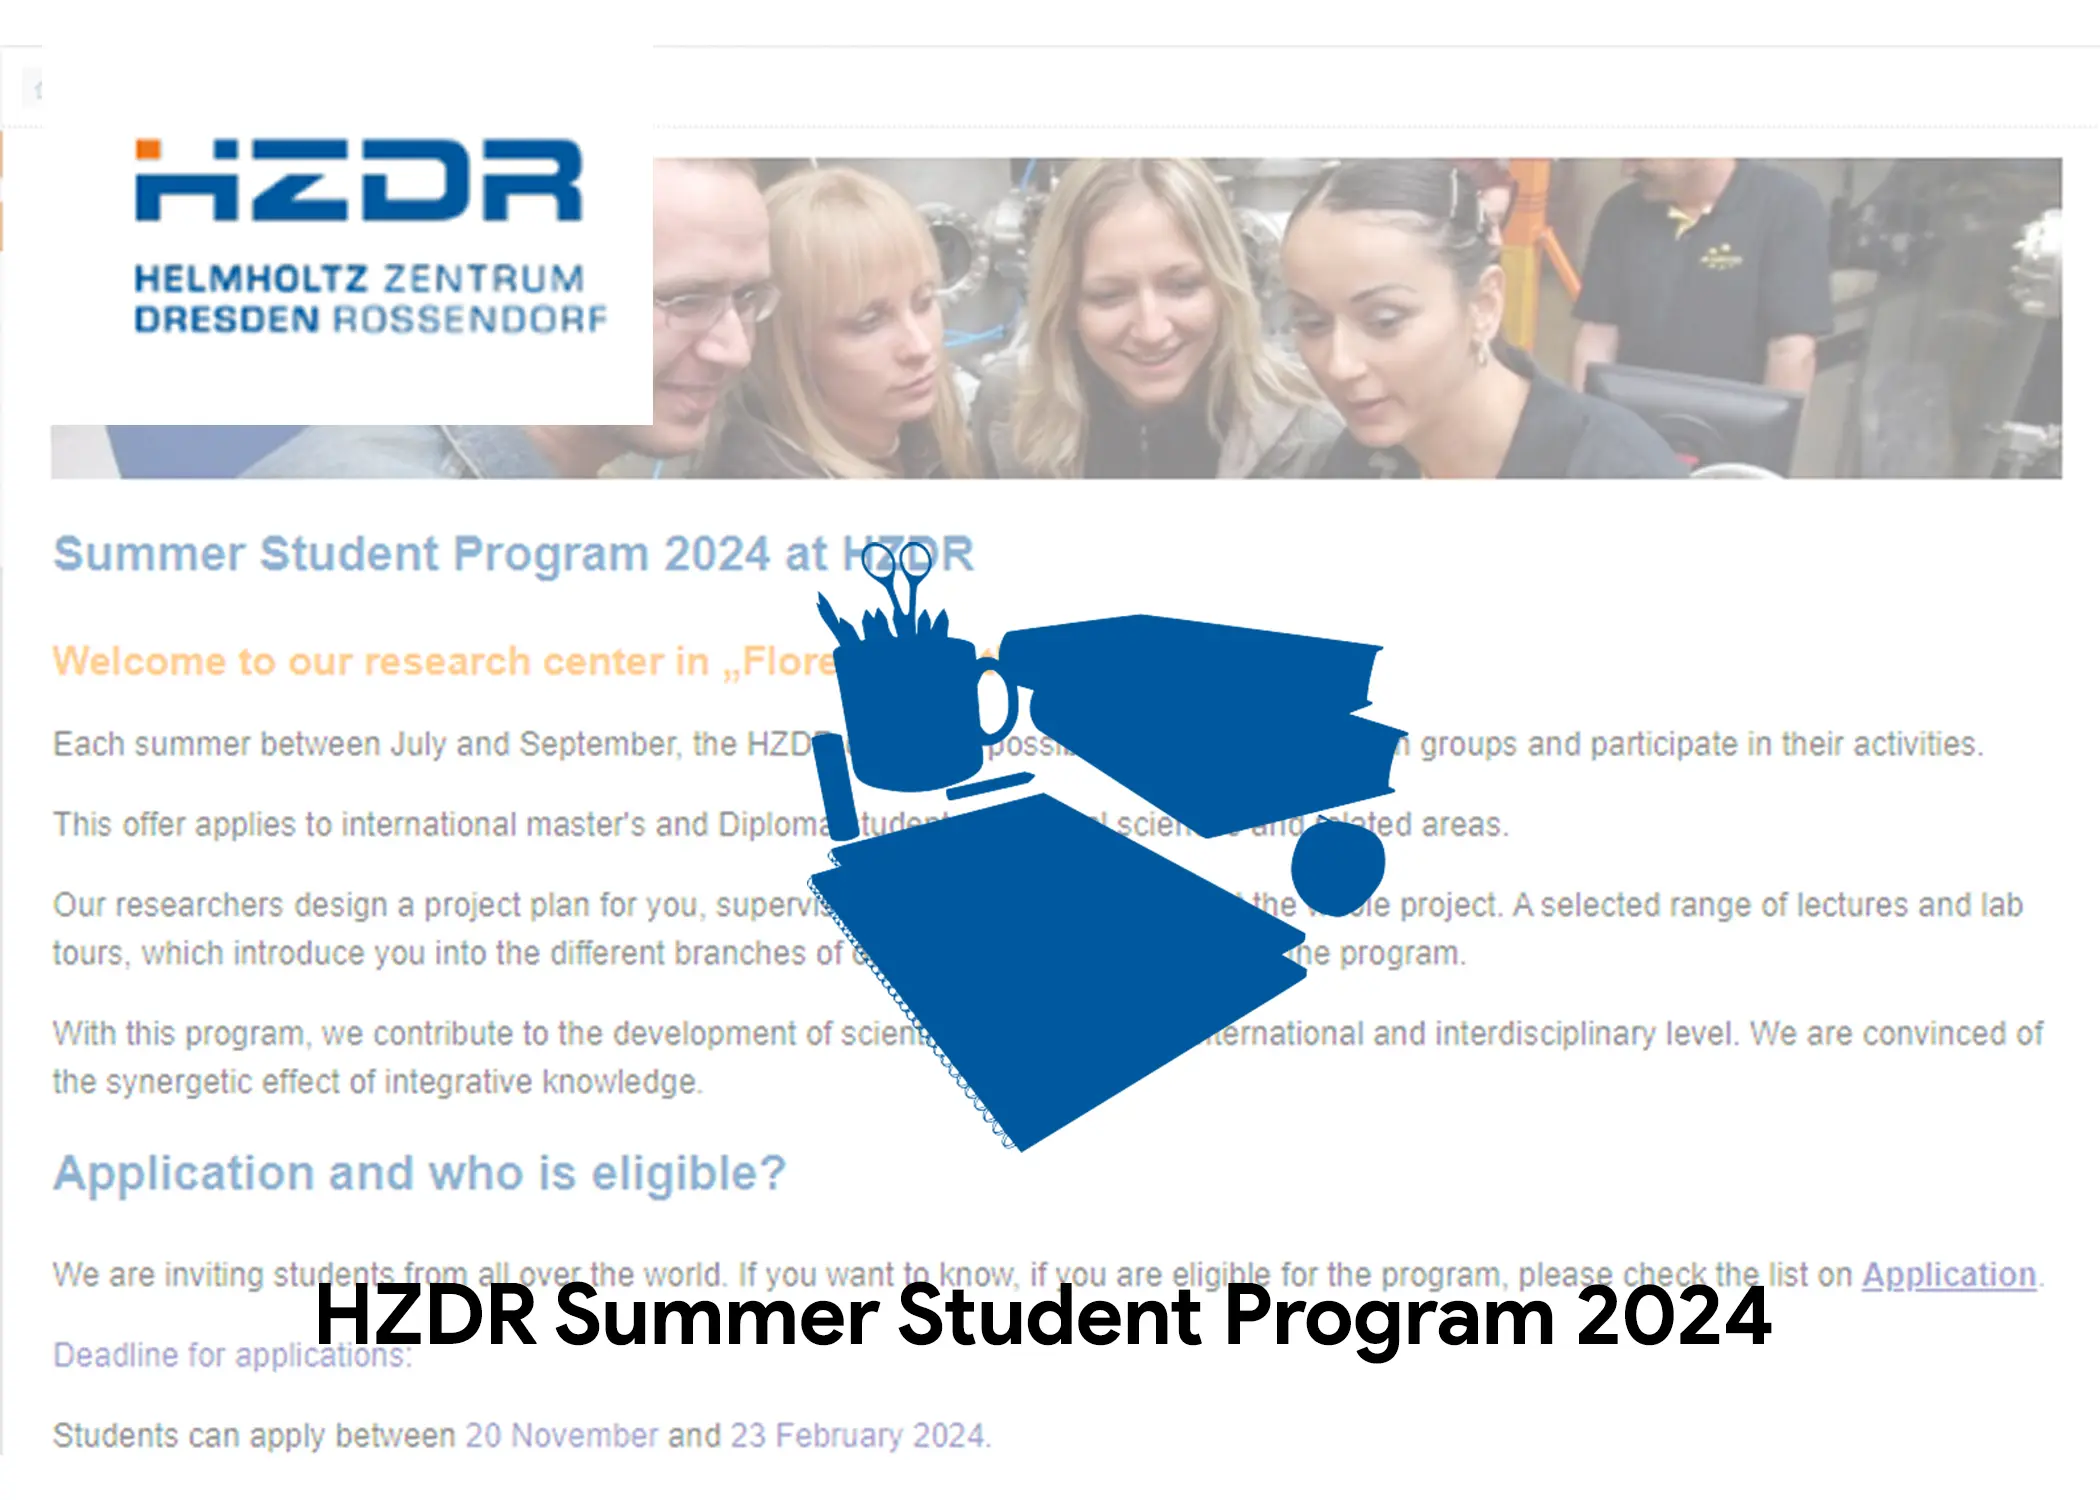 HZDR Summer Student Program 2024: Applications Open Now